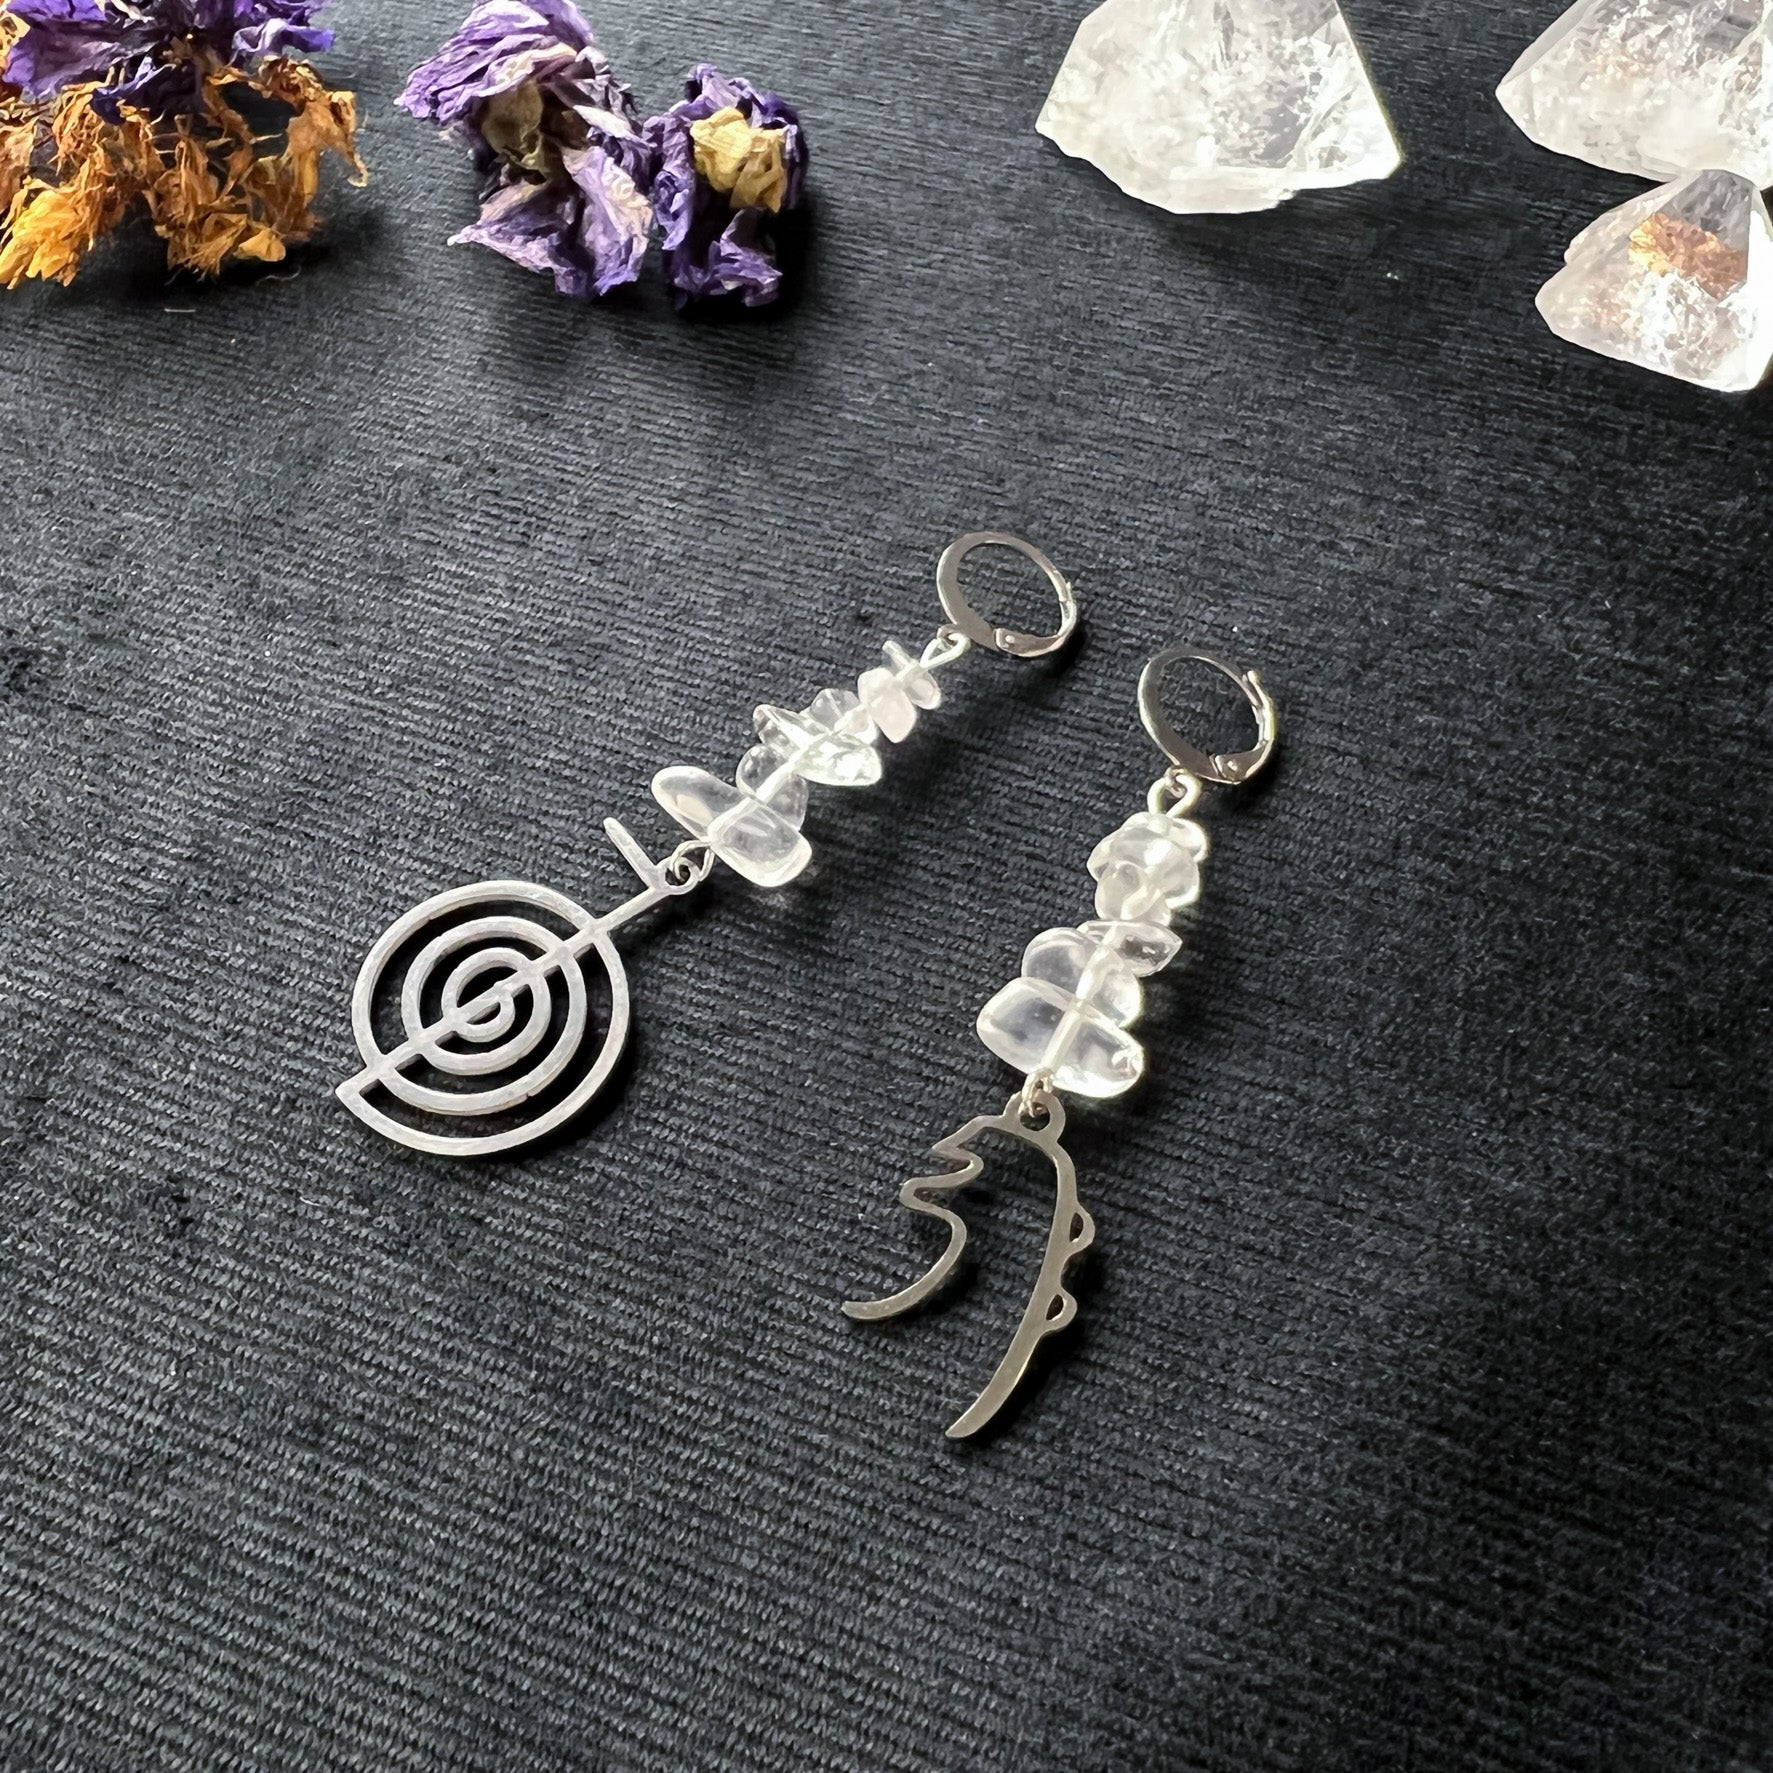 Reiki symbols earrings Cho Ku Rei and Sei He Ki stainless steel and clear quartz hypoallergenic spiritual jewelry reiki gift